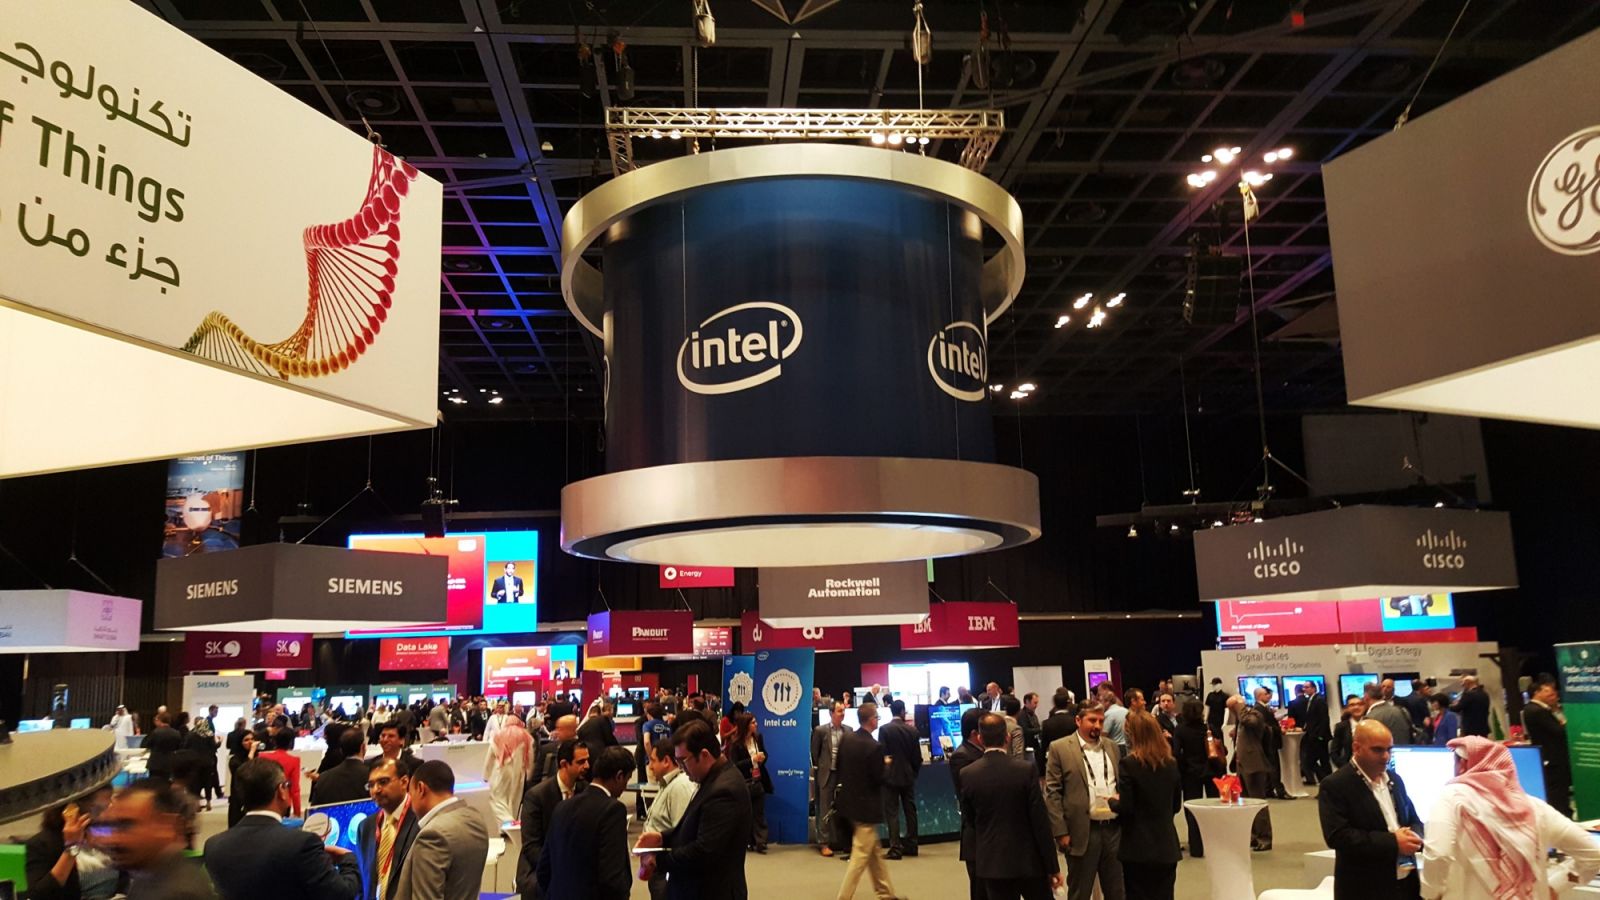 Giada joined IoTWF 2015 with Intel